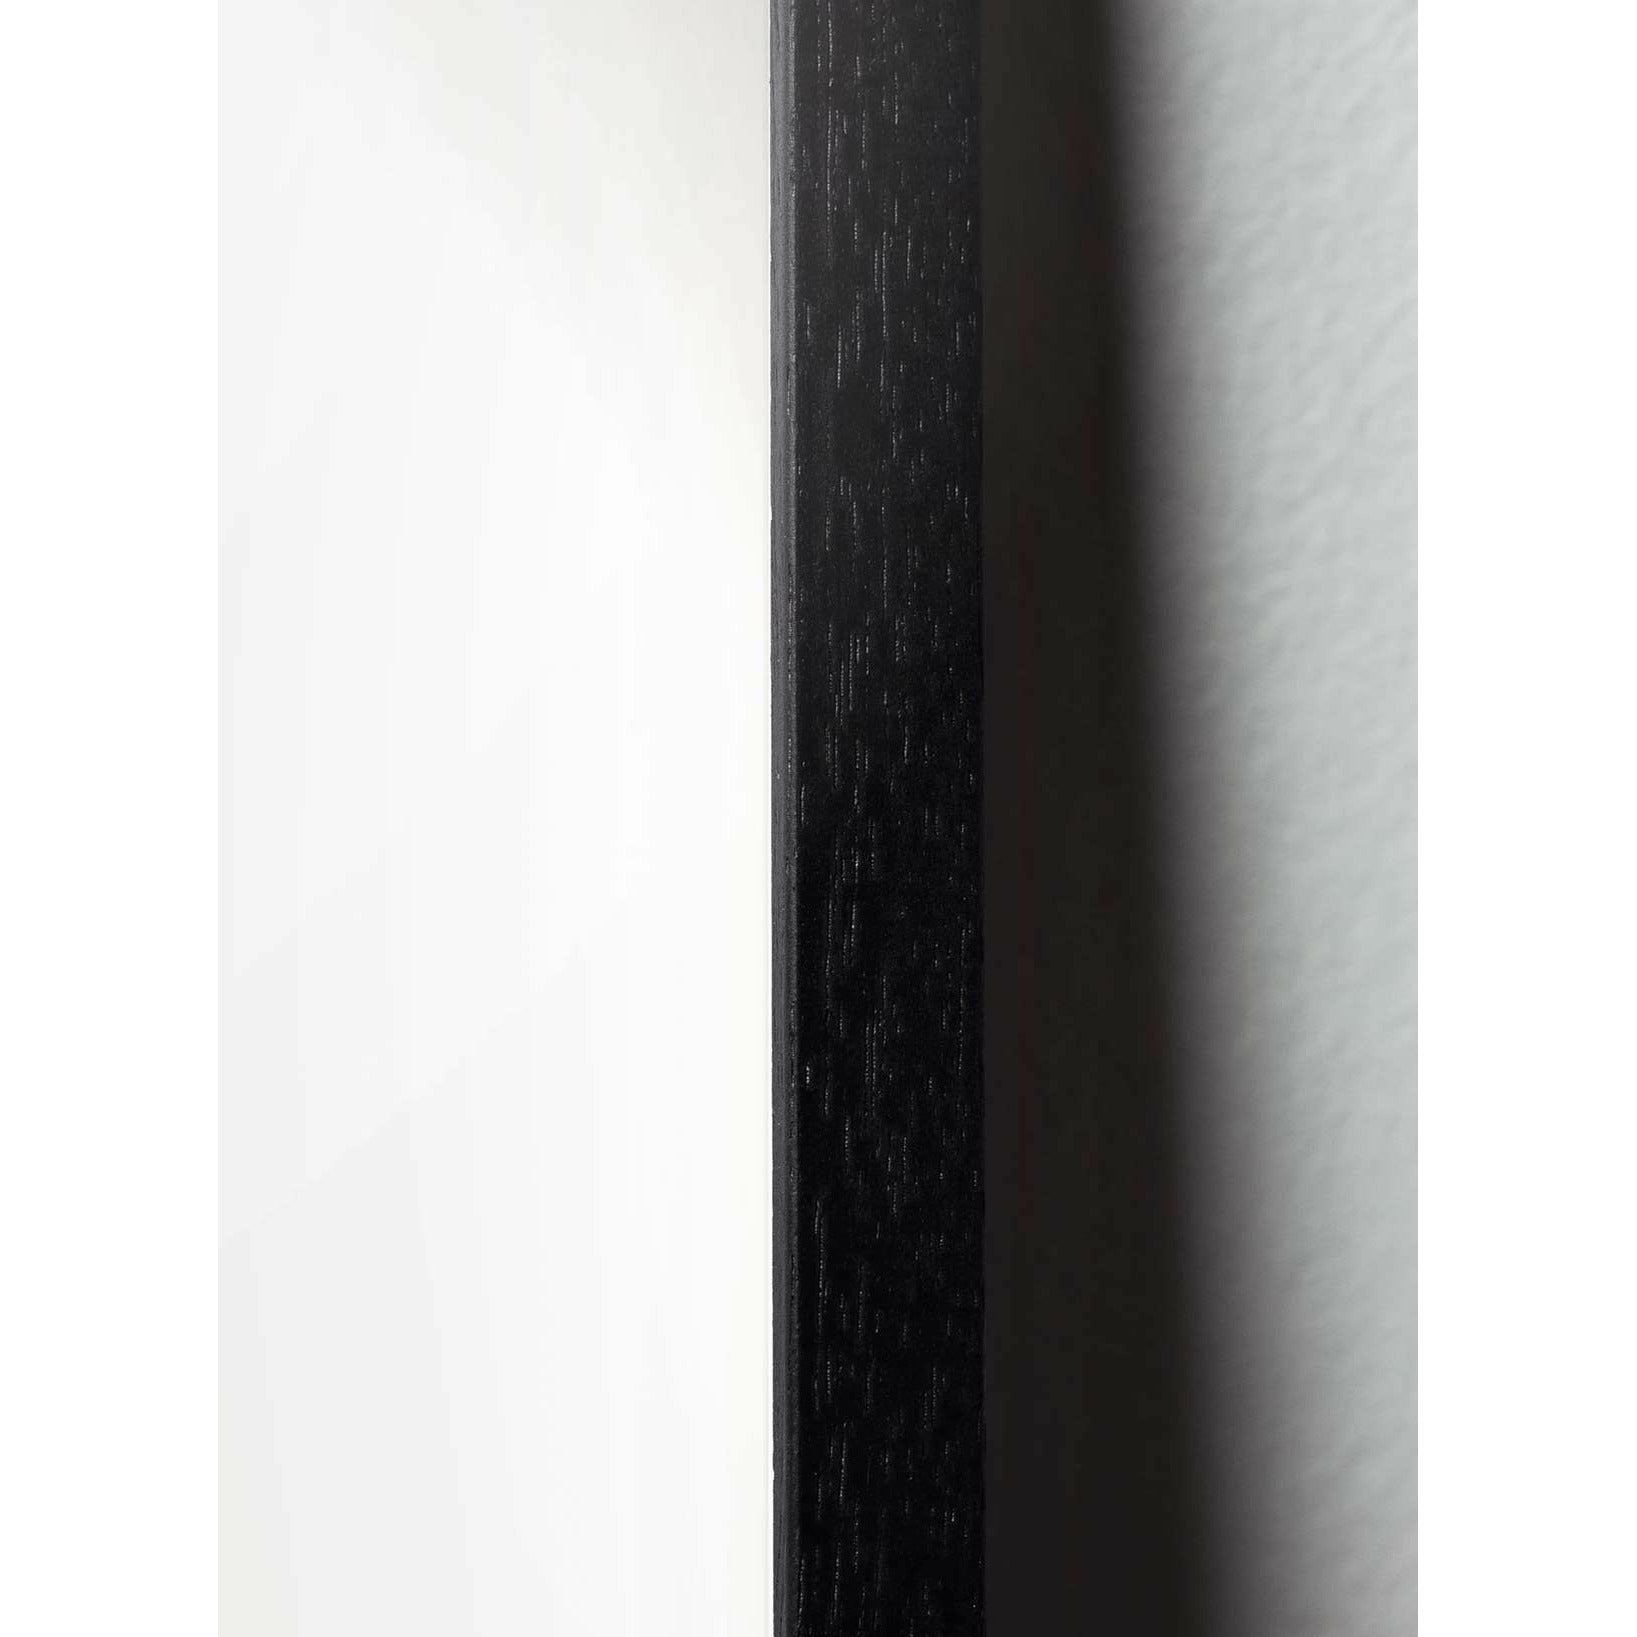 Brainchild Nallebjörn klassisk affisch, ram i svart -målat trä 70x100 cm, svart bakgrund